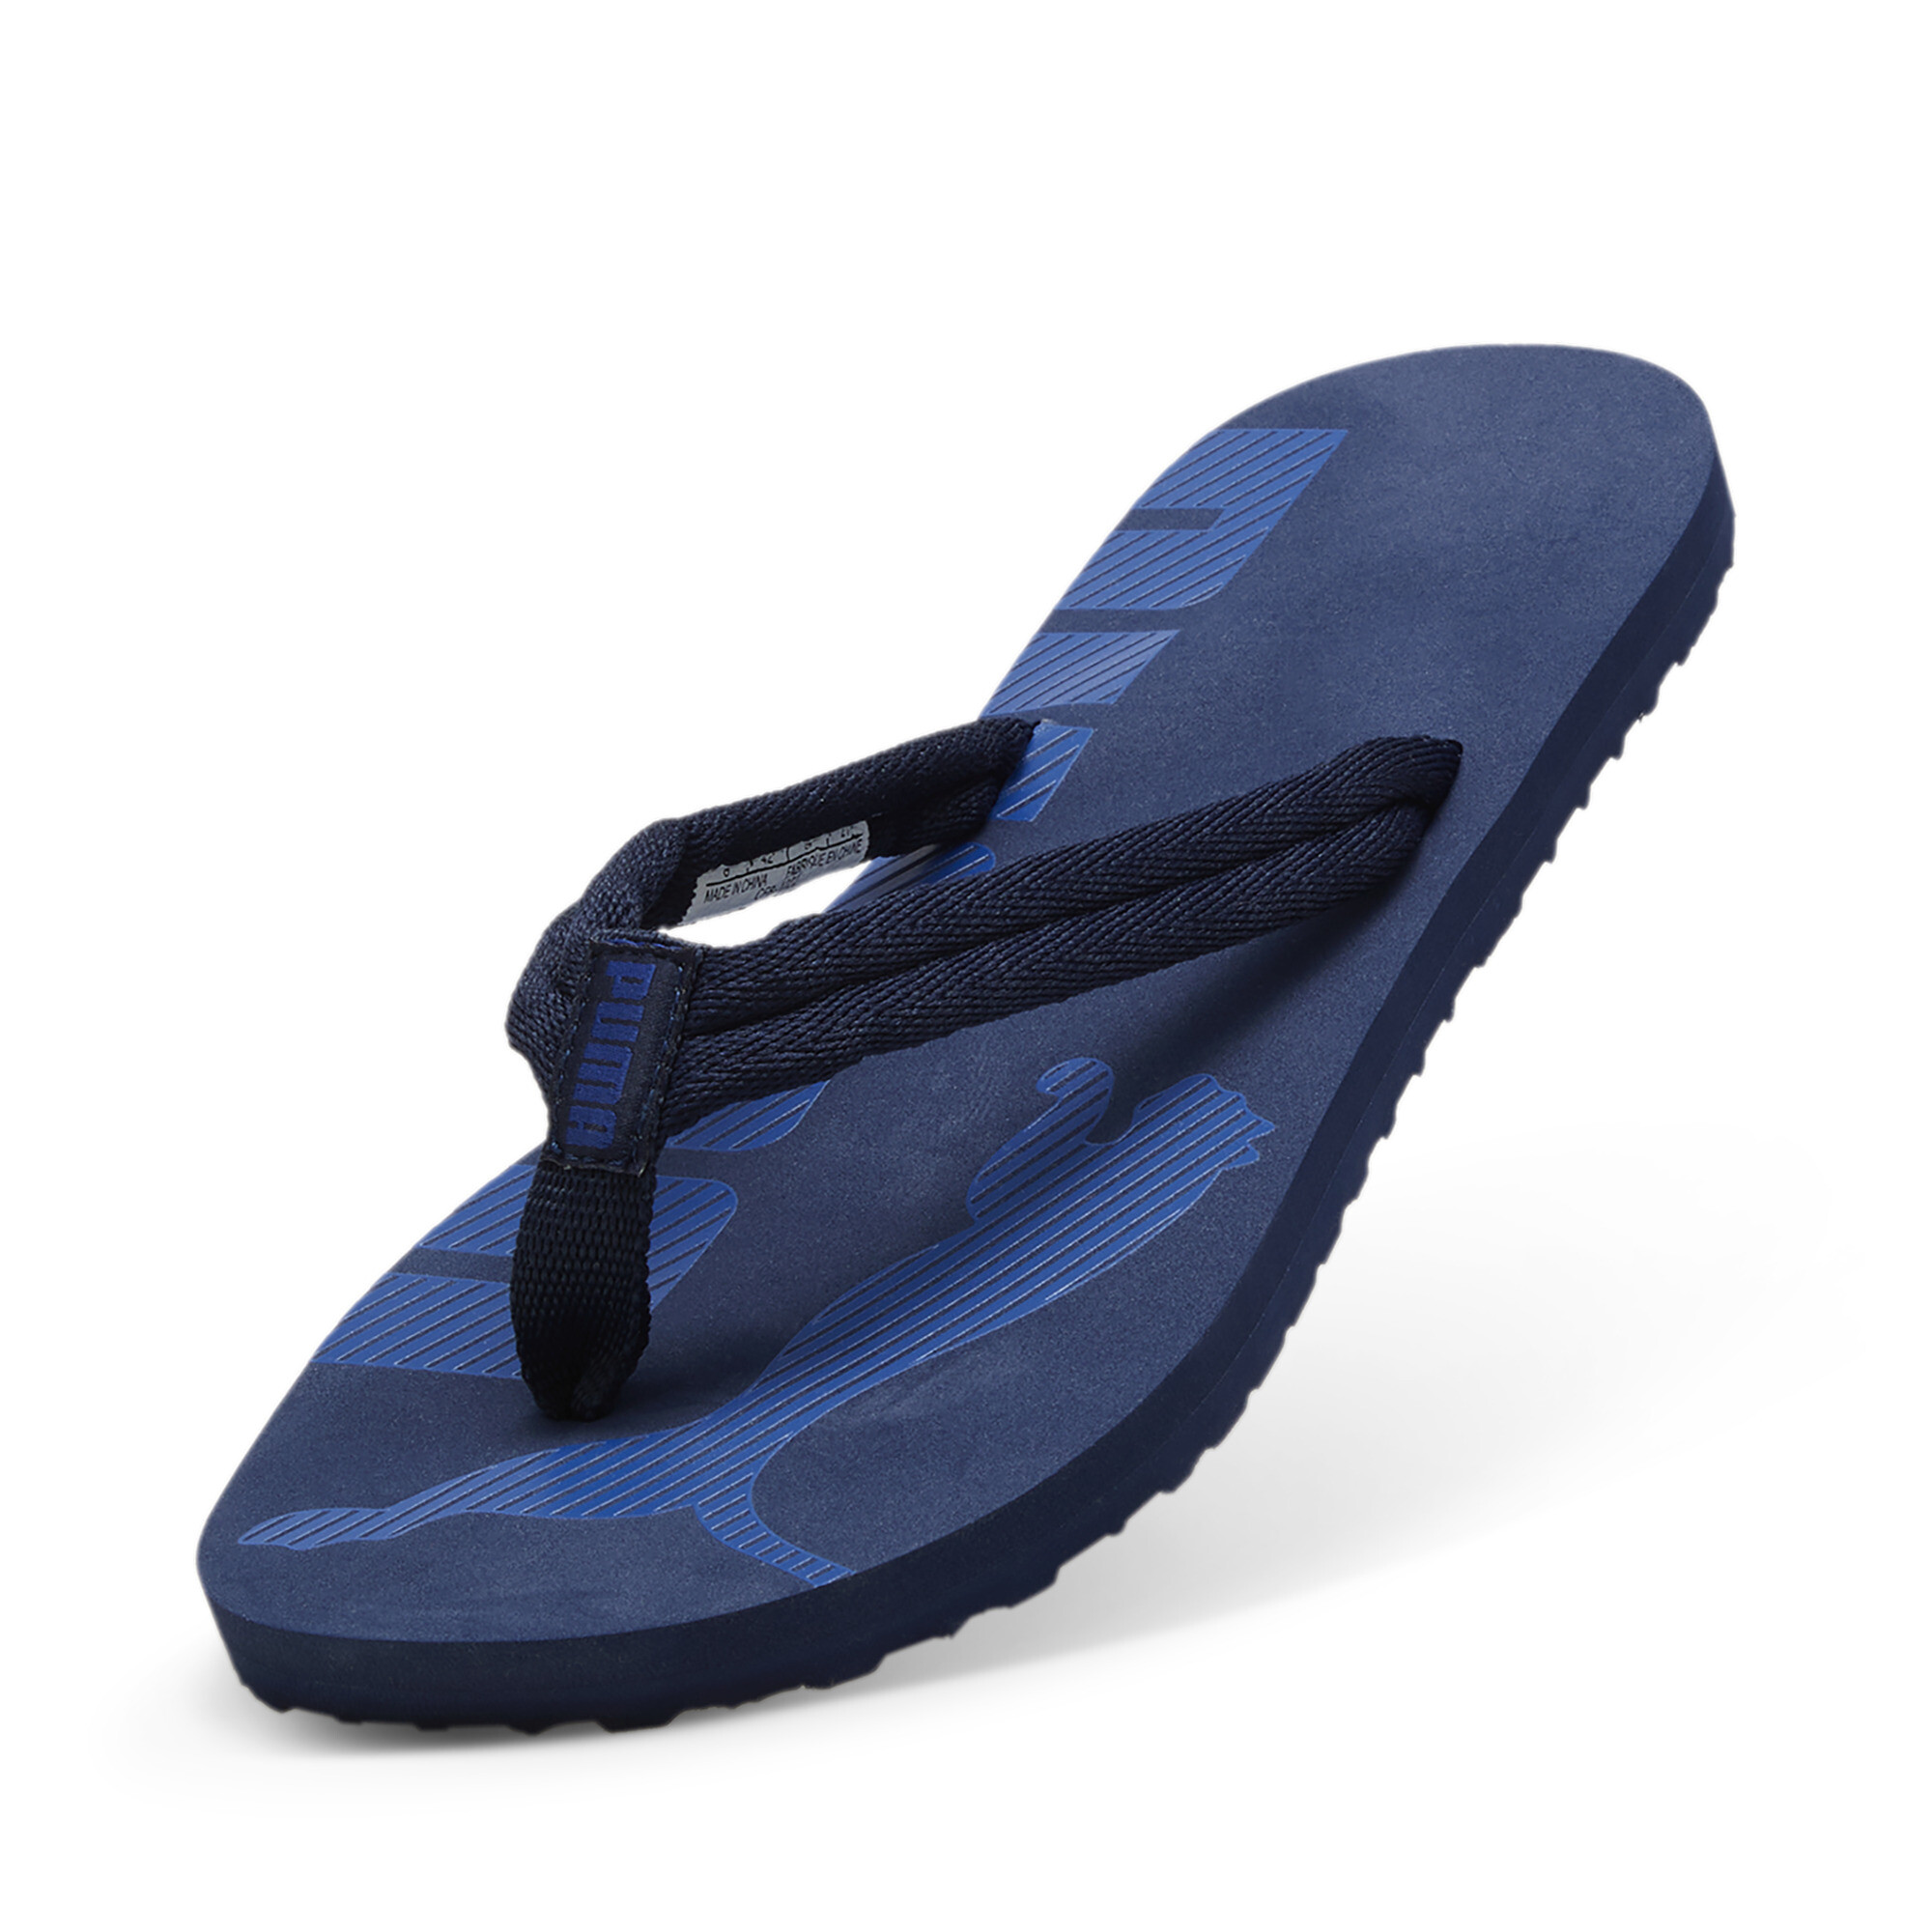 Men's PUMA Epic Flip V2 Sandals In 80 - Blue, Size EU 42